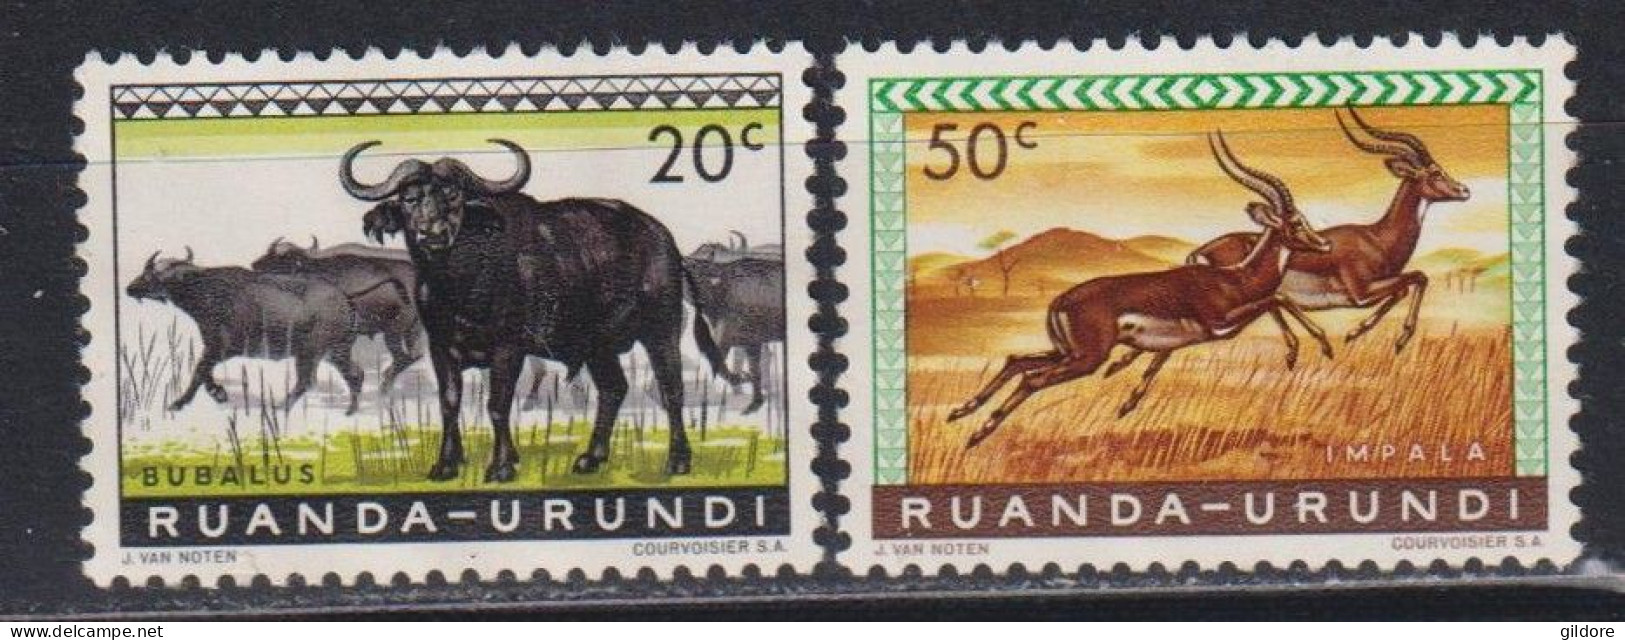 RUANDA URUNDI 1962 - 2 STAMP MNH - Unused Stamps